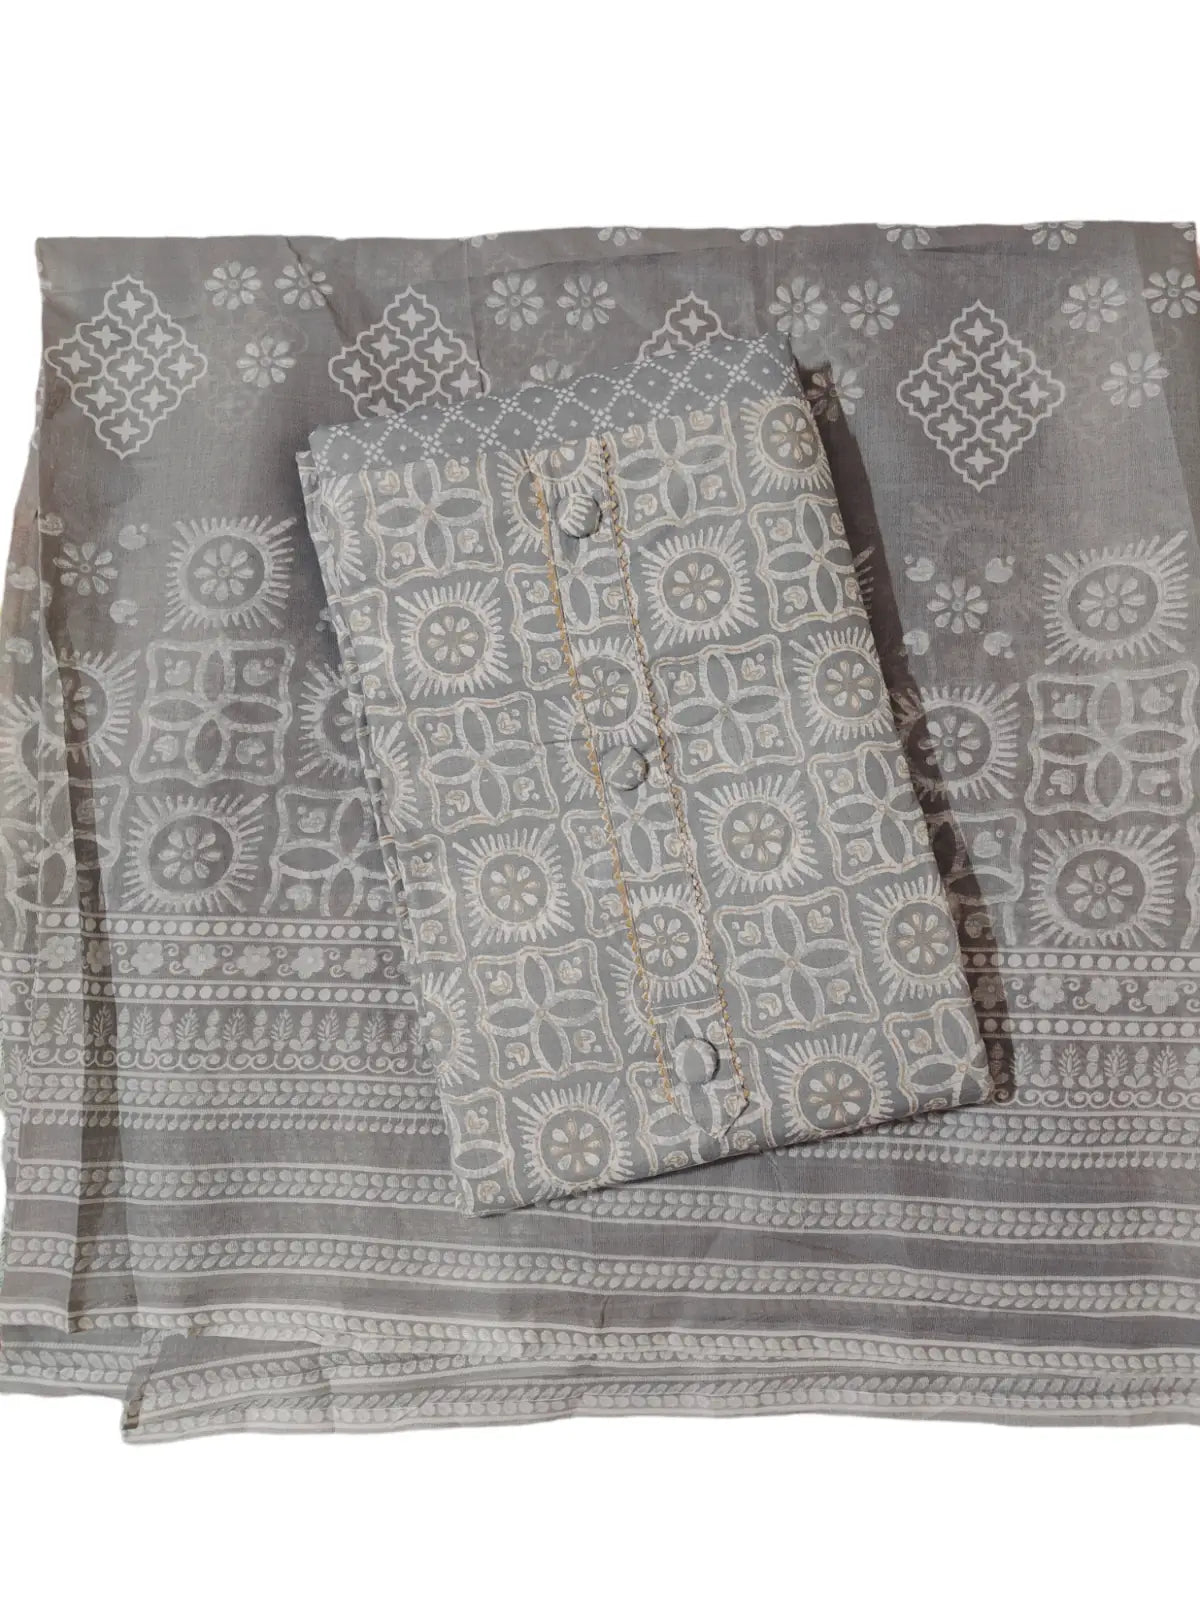 Cotton Dress Material (Unstitched Salwar Suit)- BBQSTYLE